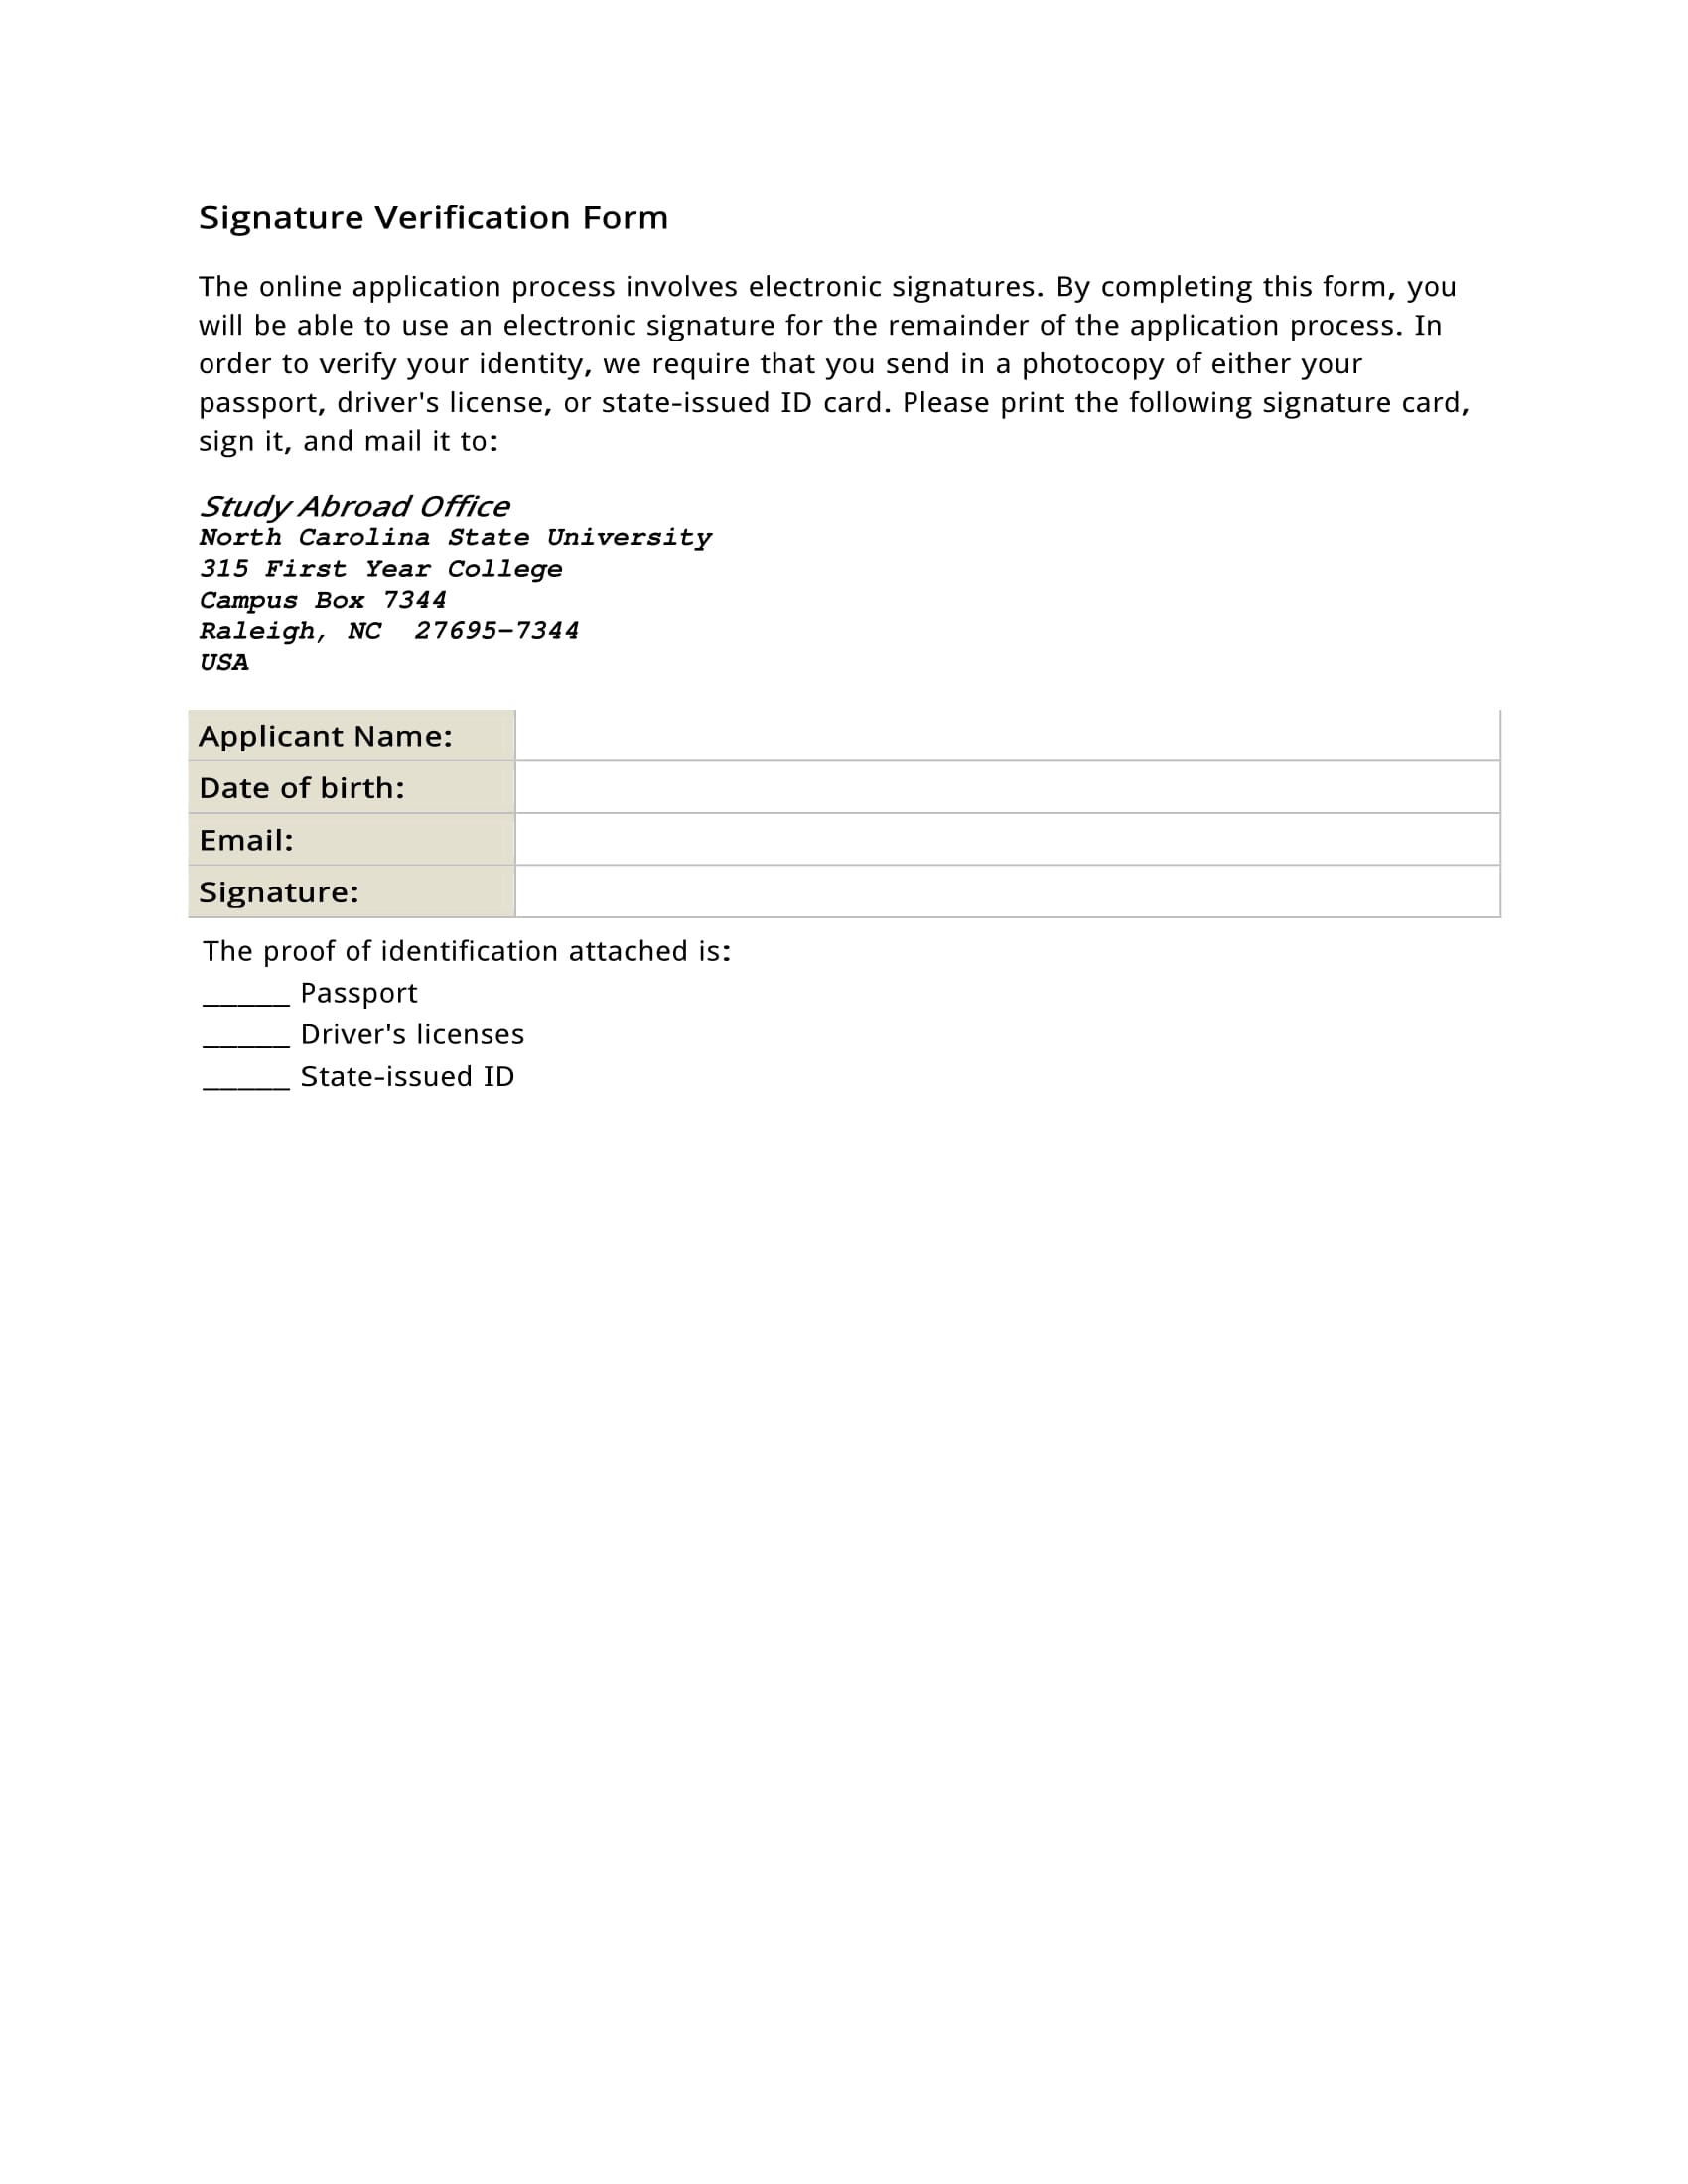 application signature verification form 1